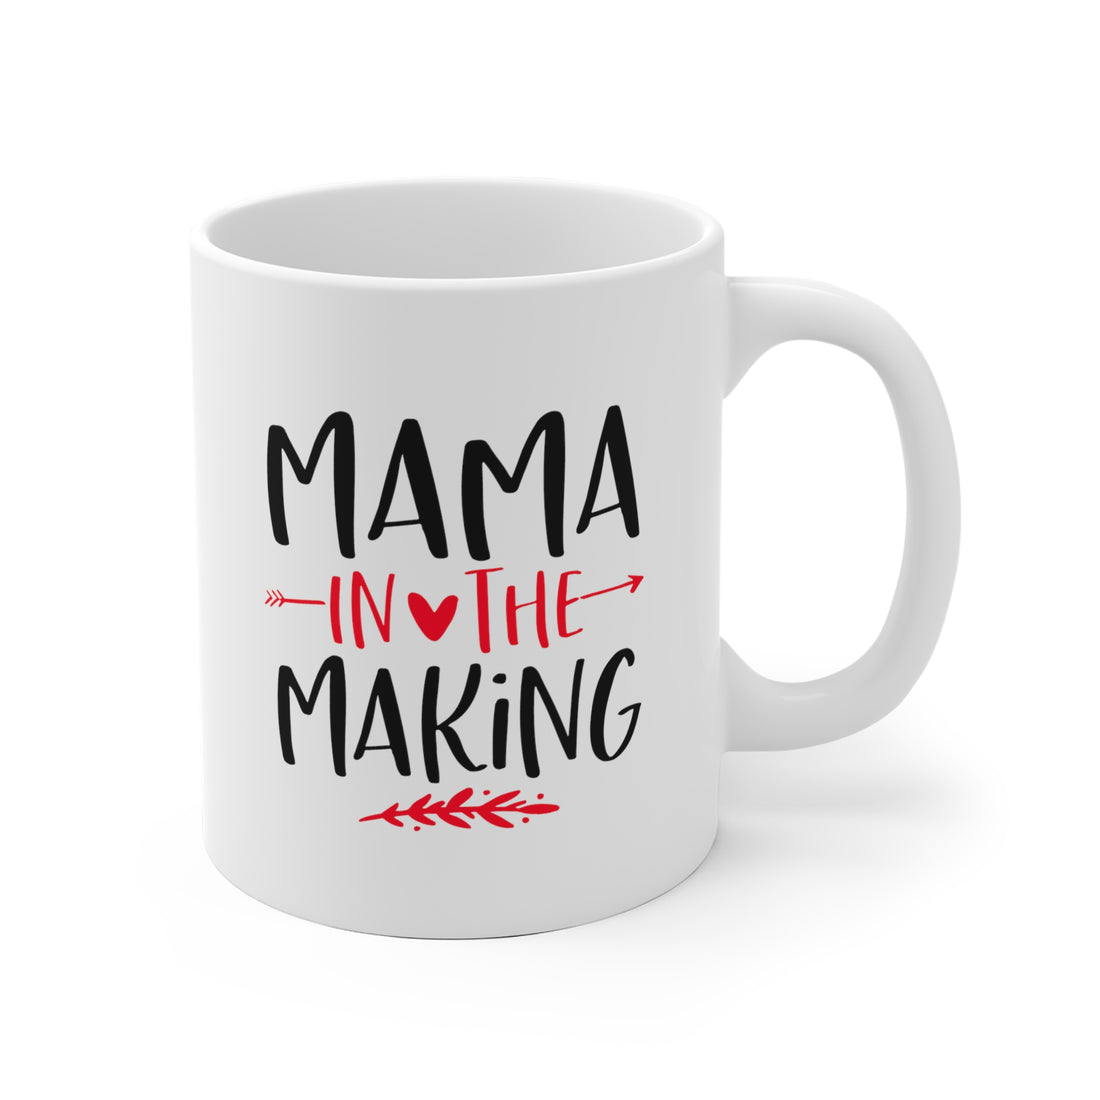 Mama In The Making - White Ceramic Mug 2 sizes Available